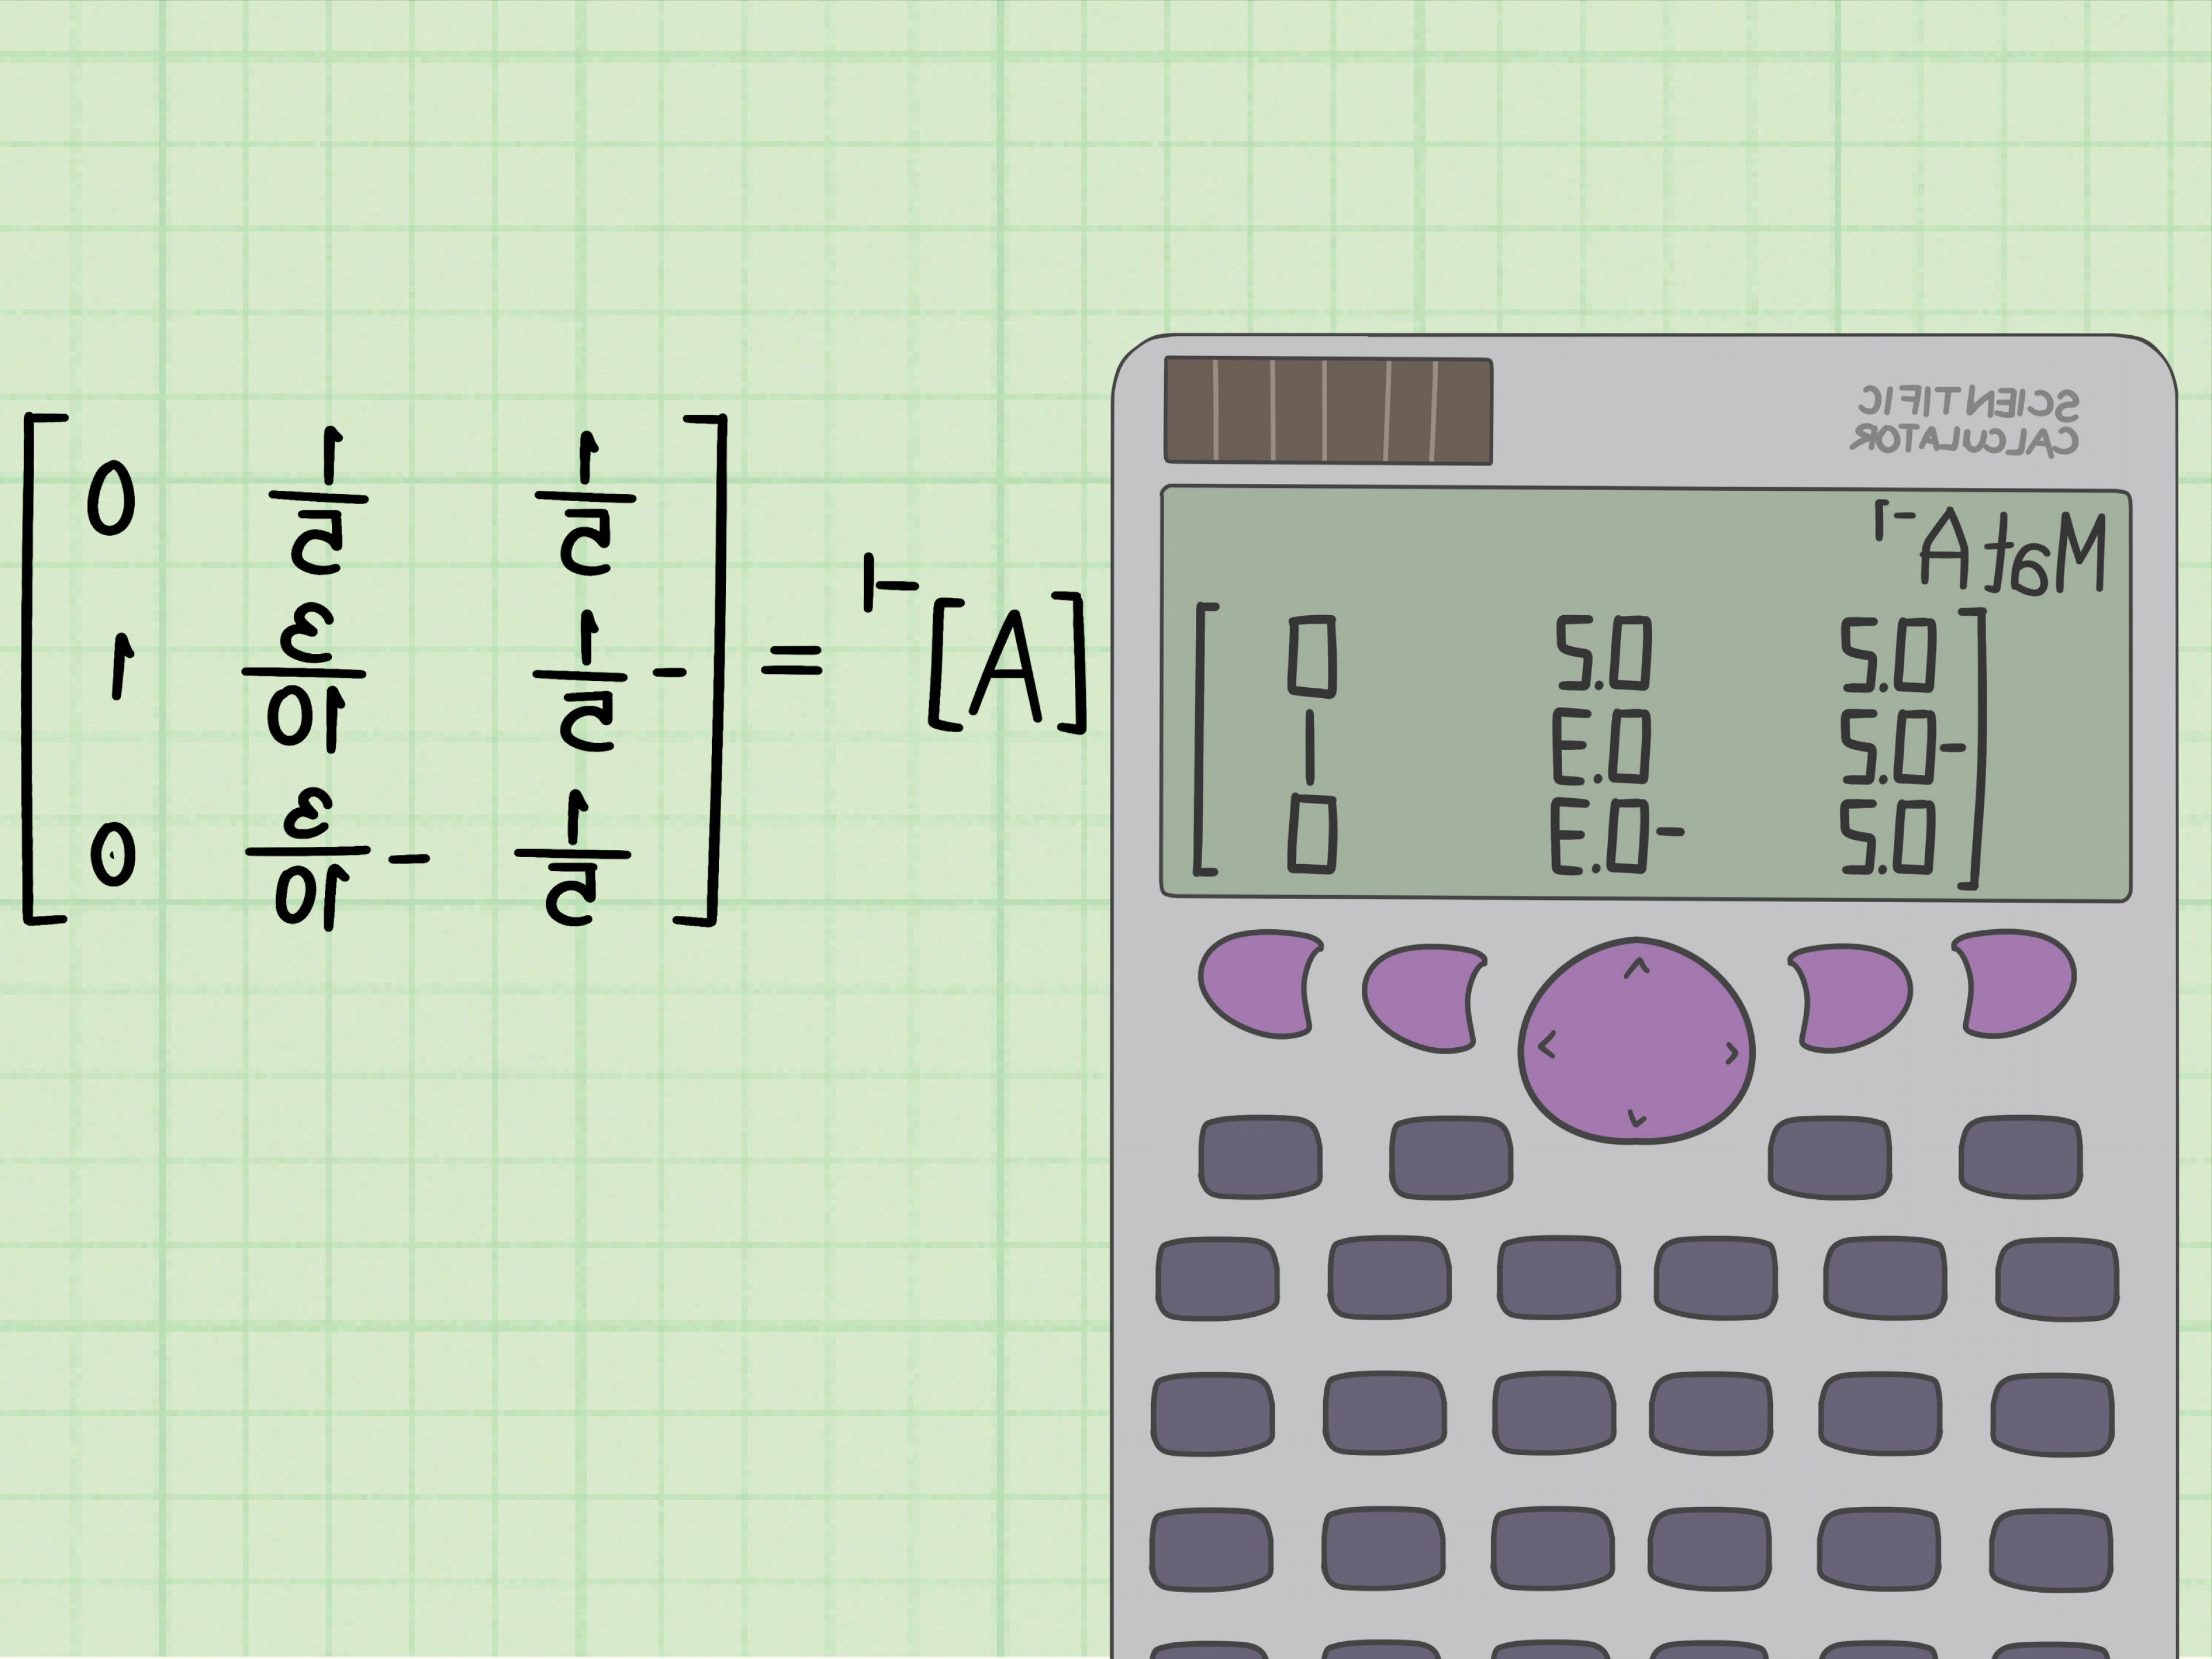 inverse symbolic calculator graphing calculator